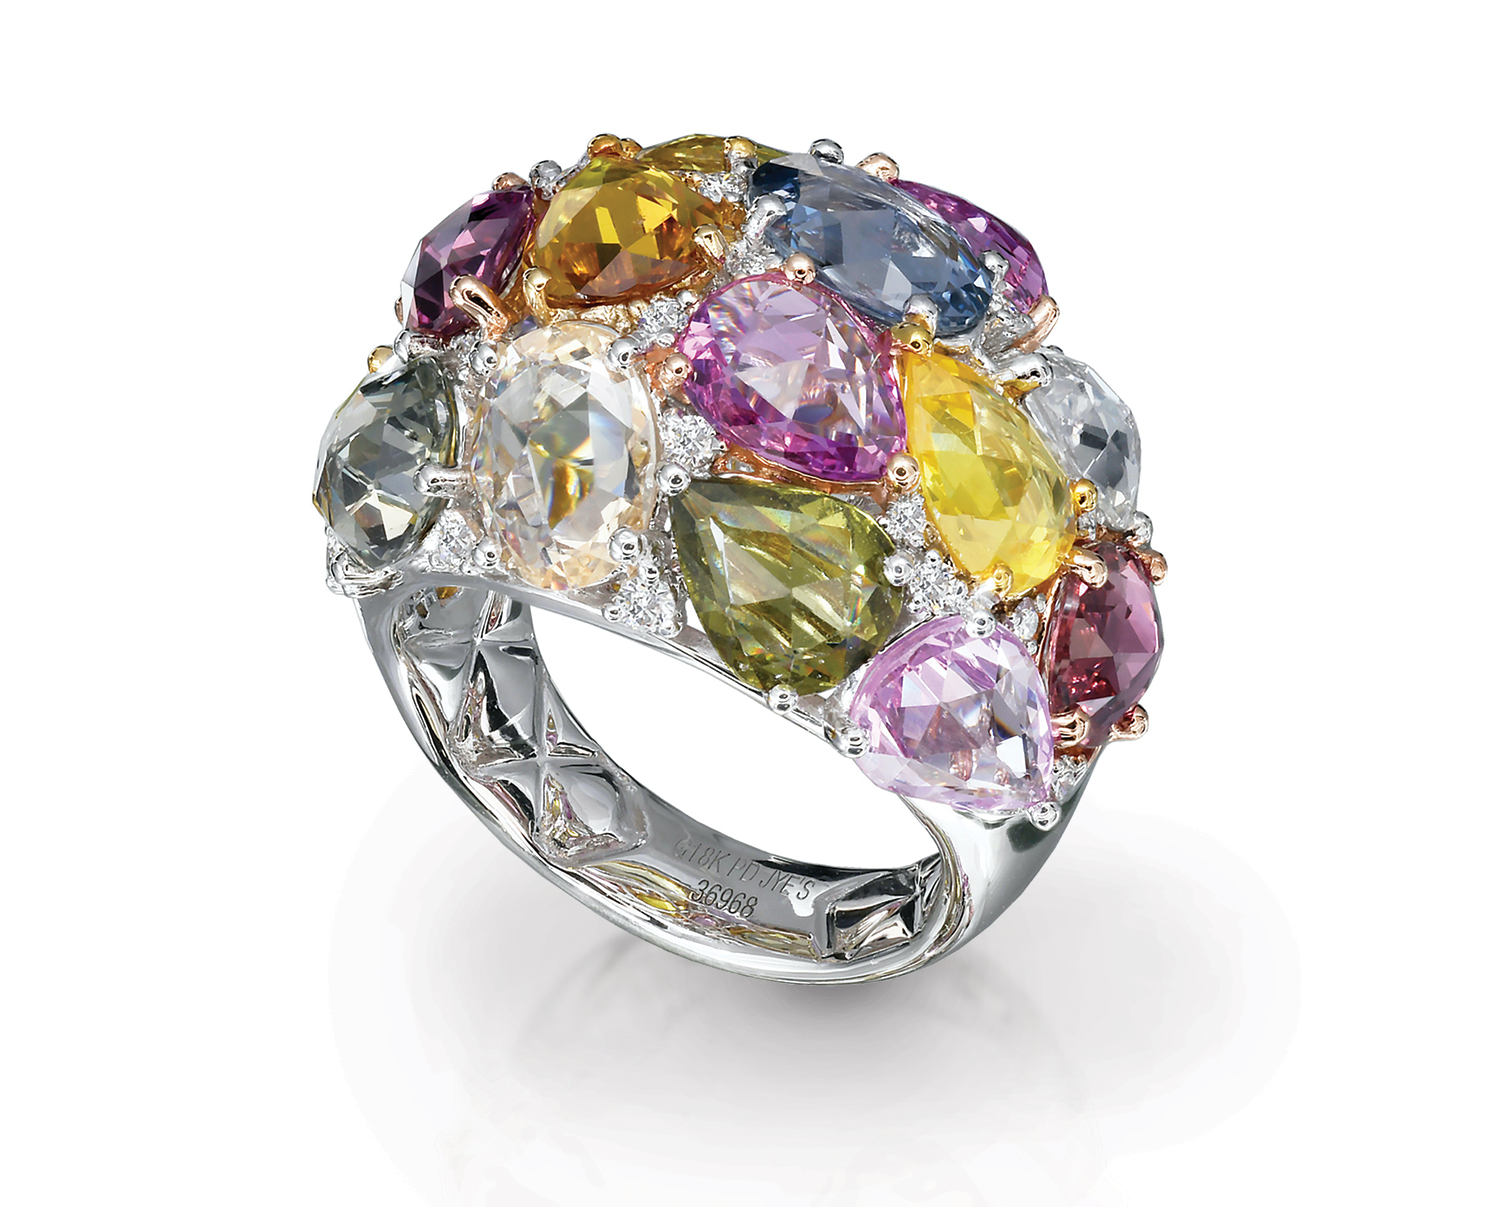 INSTORE Design Awards 2023 – Rainbow Jewelry